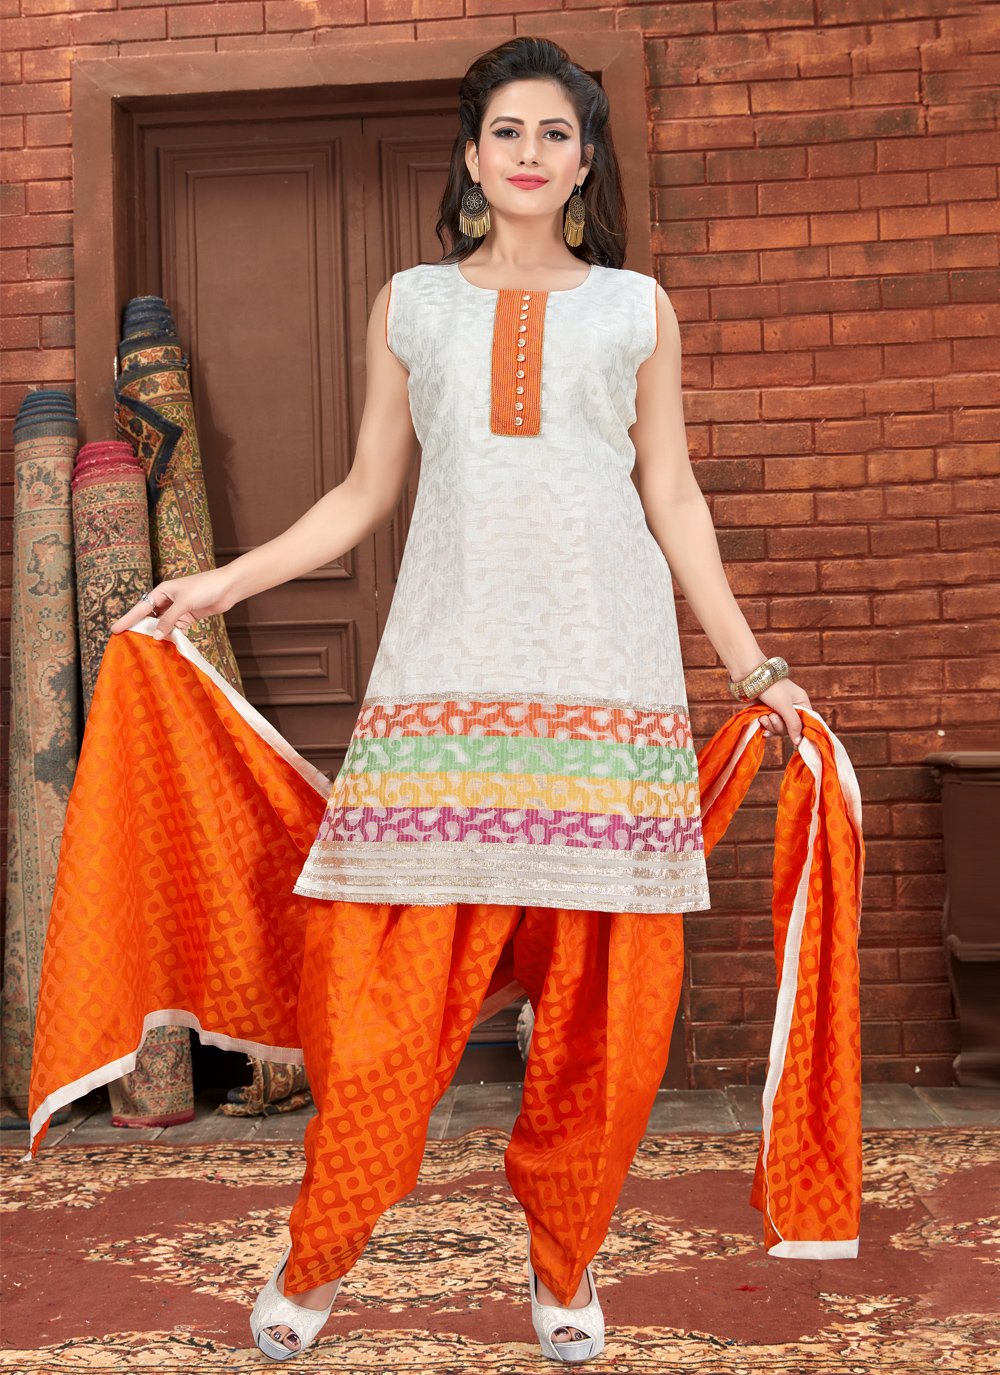 Sanvi Fabrics Patiala Suits Dress at Rs. 826/- Free Shipping & COD – 1416A  – Dress Material Online – Sanvi Fabrics